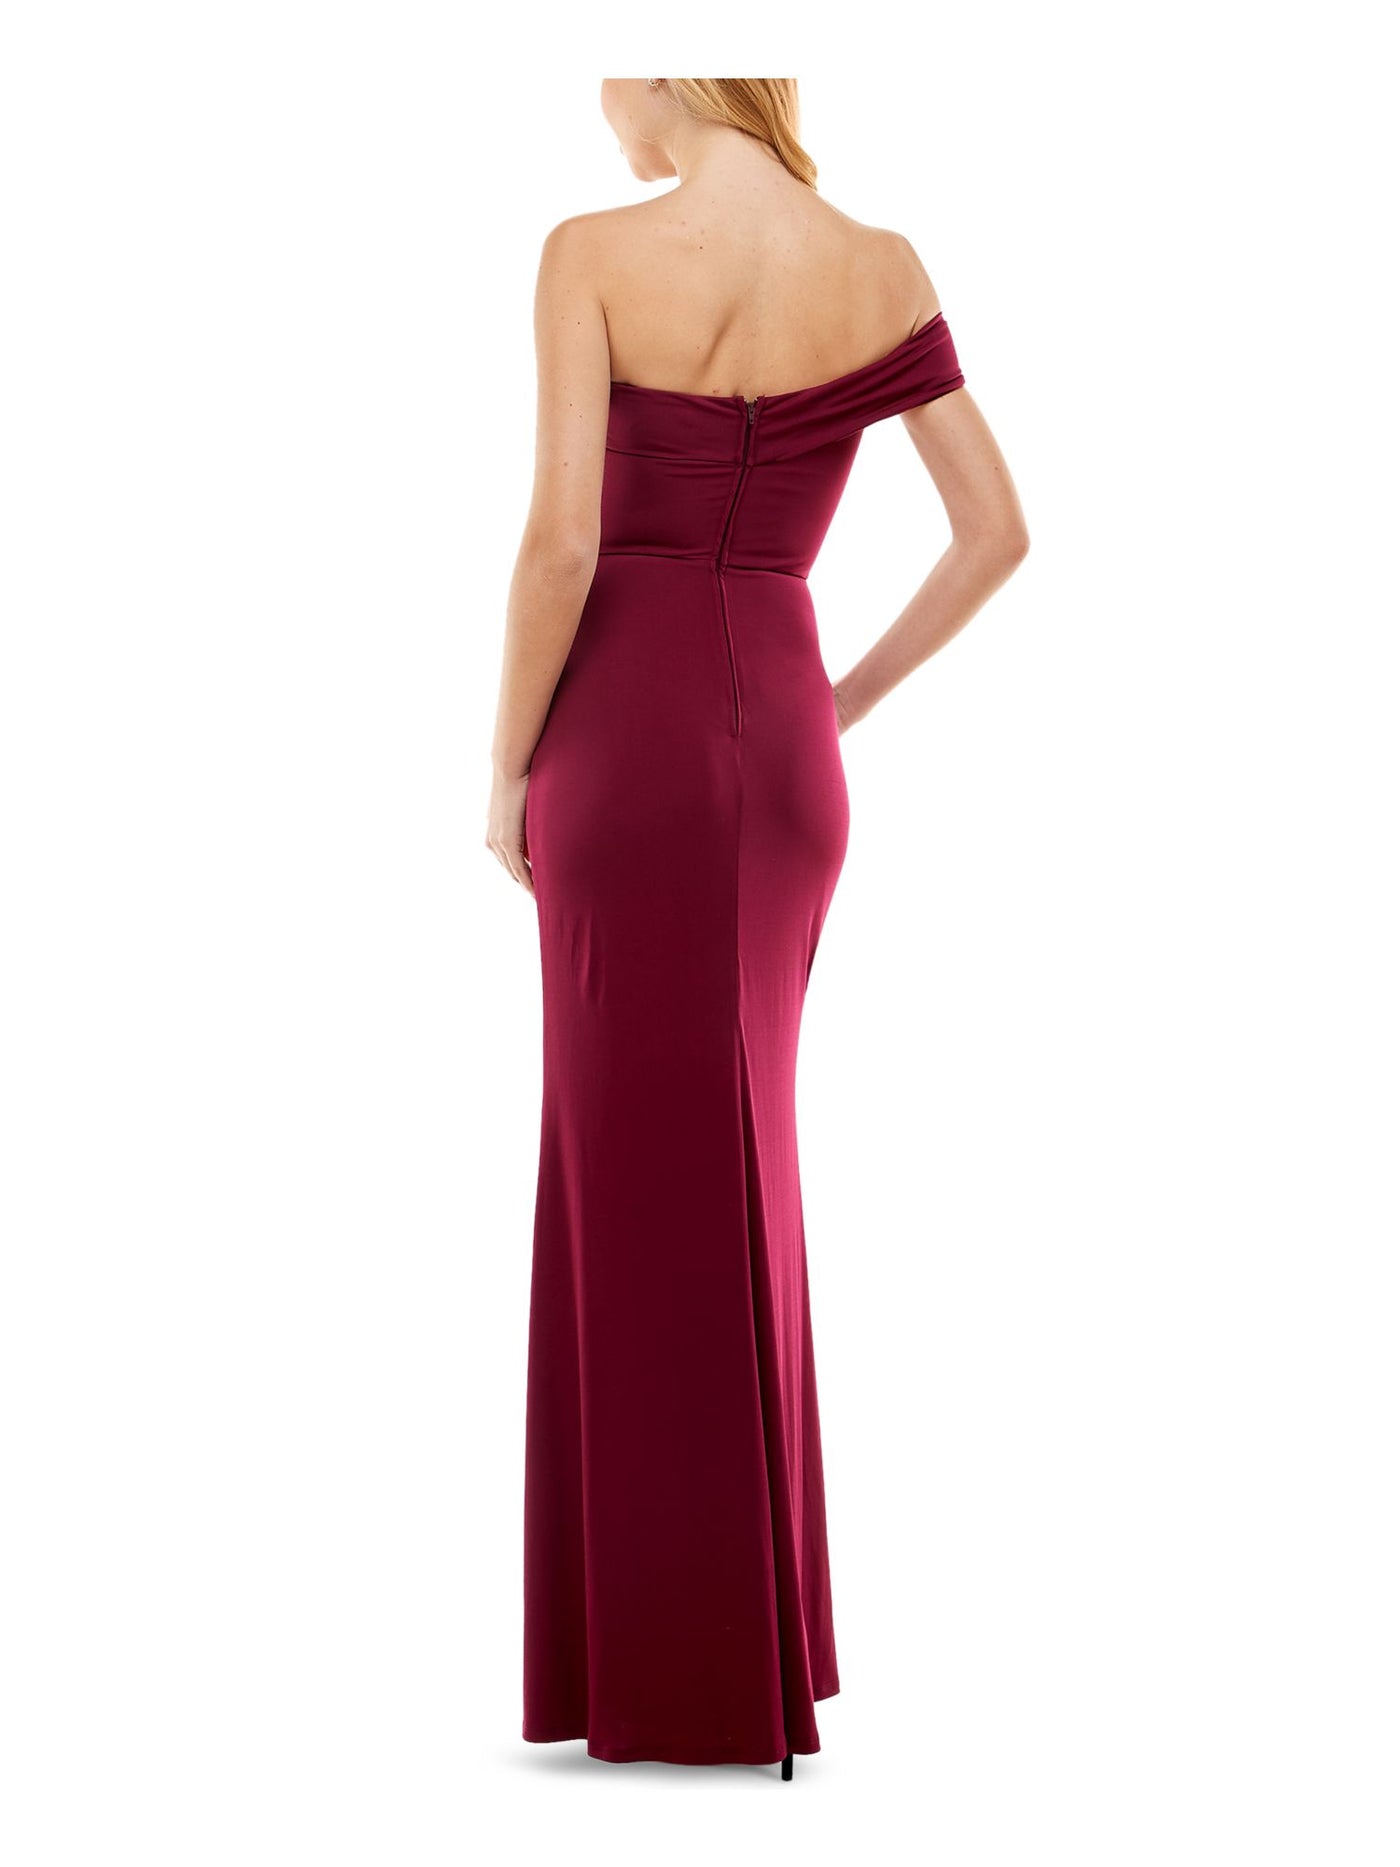 CITY STUDIO Womens Burgundy Zippered Lined One Shoulder Front Slit Off Shoulder Full-Length Formal Gown Dress Juniors 0